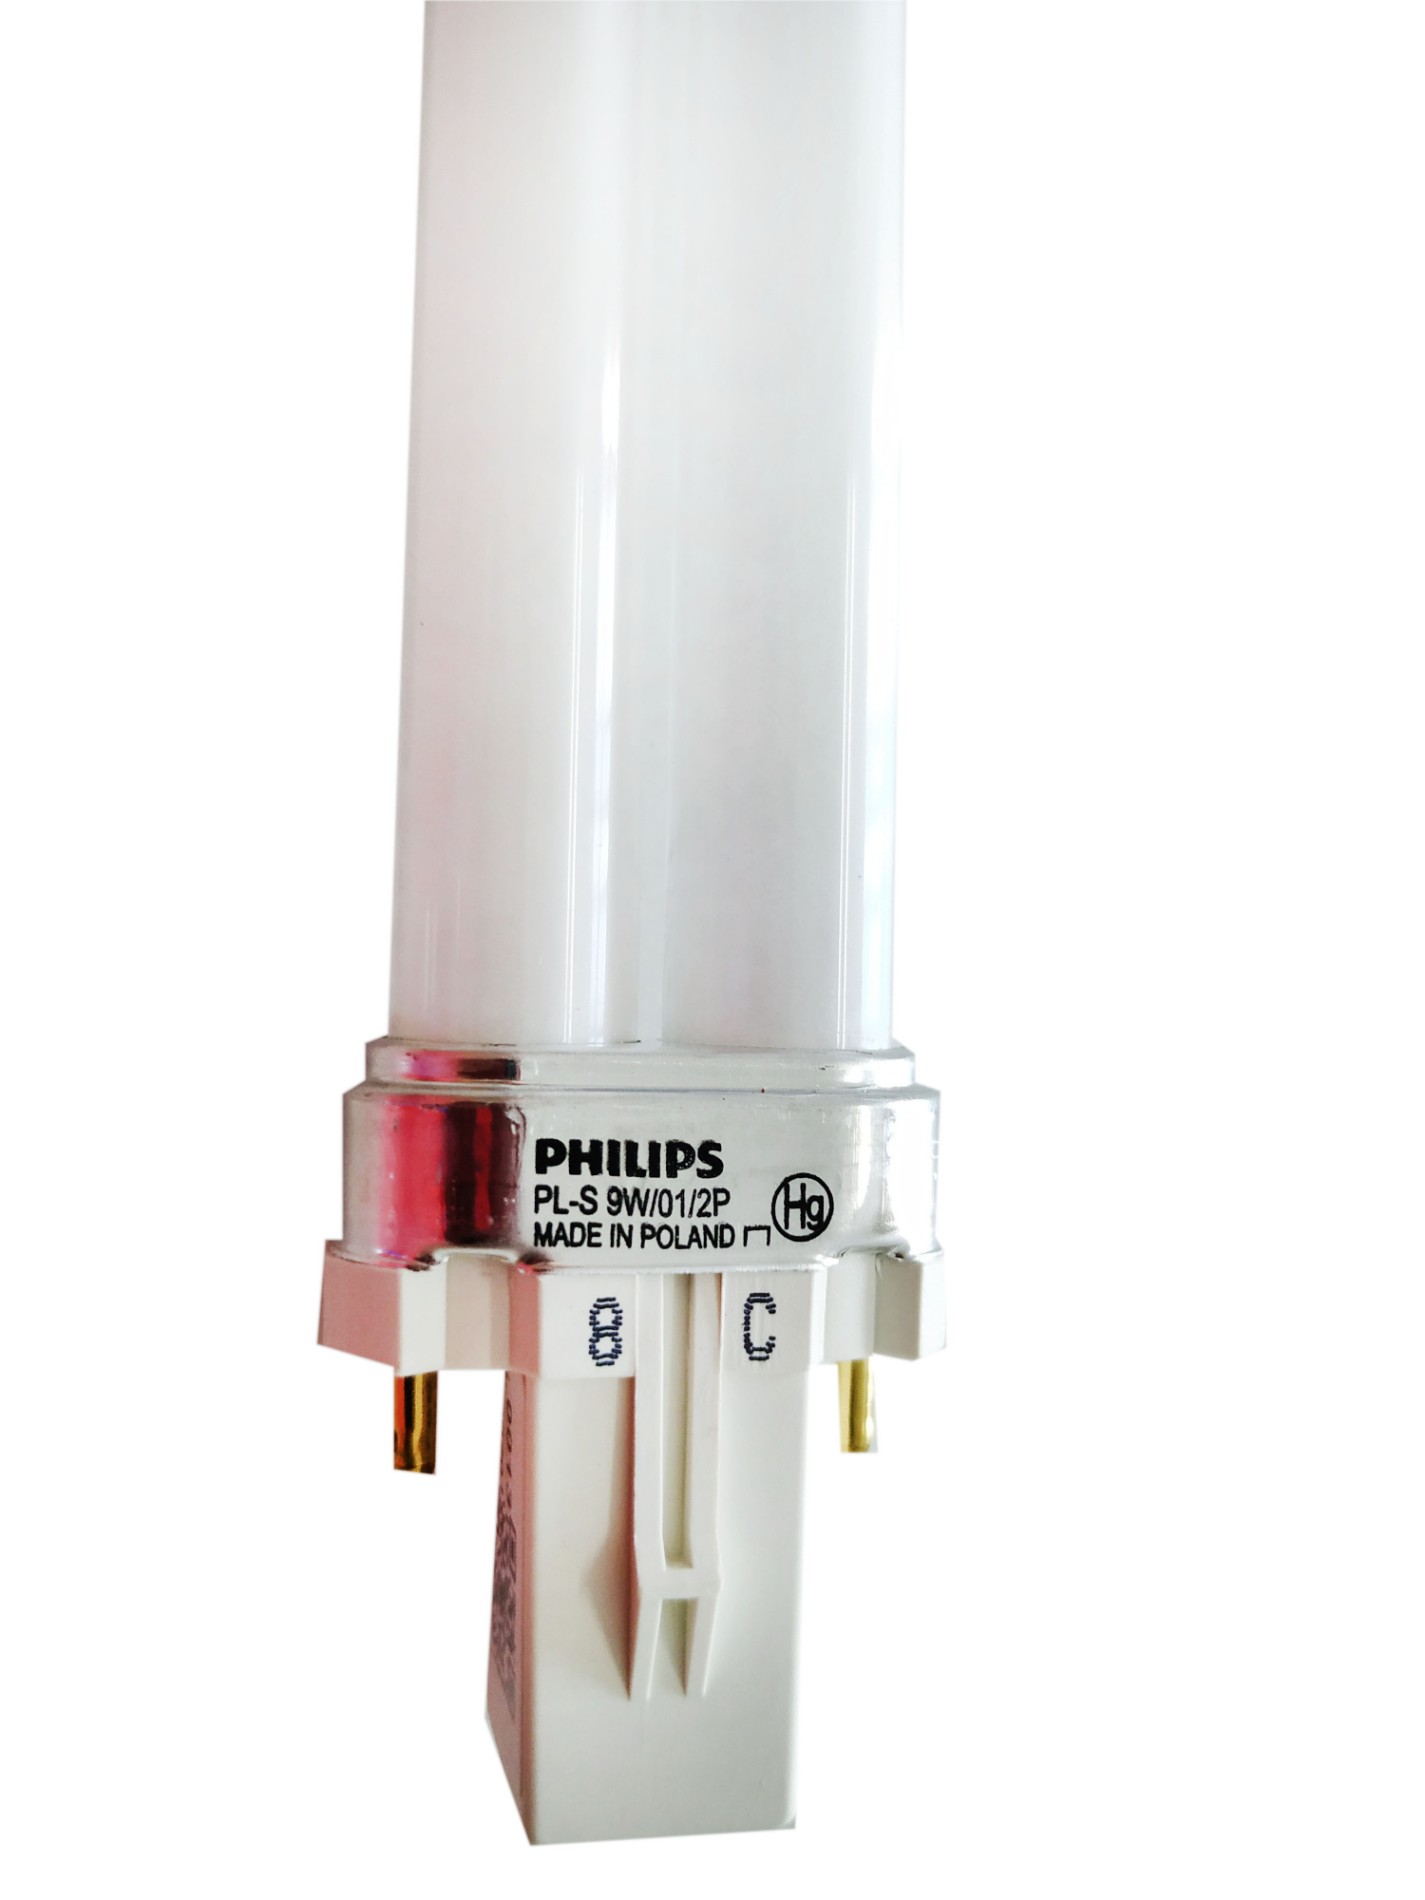 Philips PL-S Narrow Band UVB Lamp Manufacturers, Philips PL-S Narrow Band UVB Lamp Factory, Supply Philips PL-S Narrow Band UVB Lamp